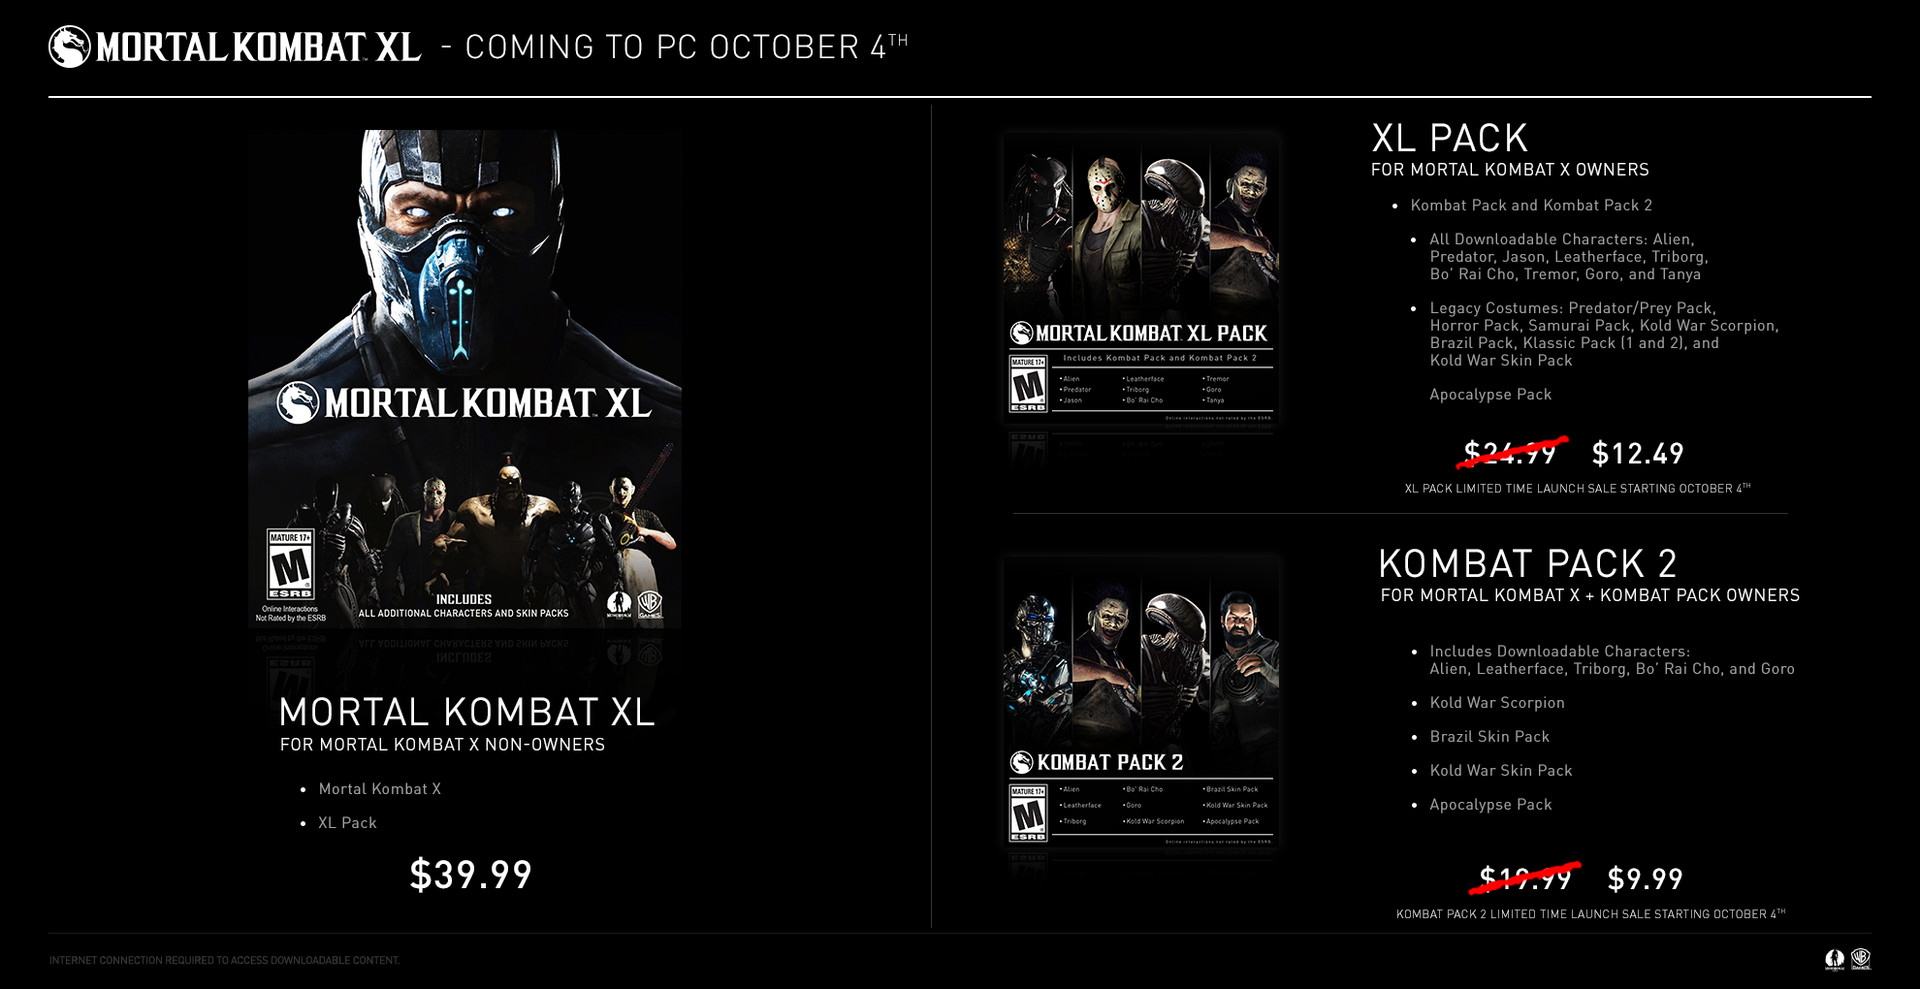 Mortal Kombat Xl - Price & Special Deals Revealed